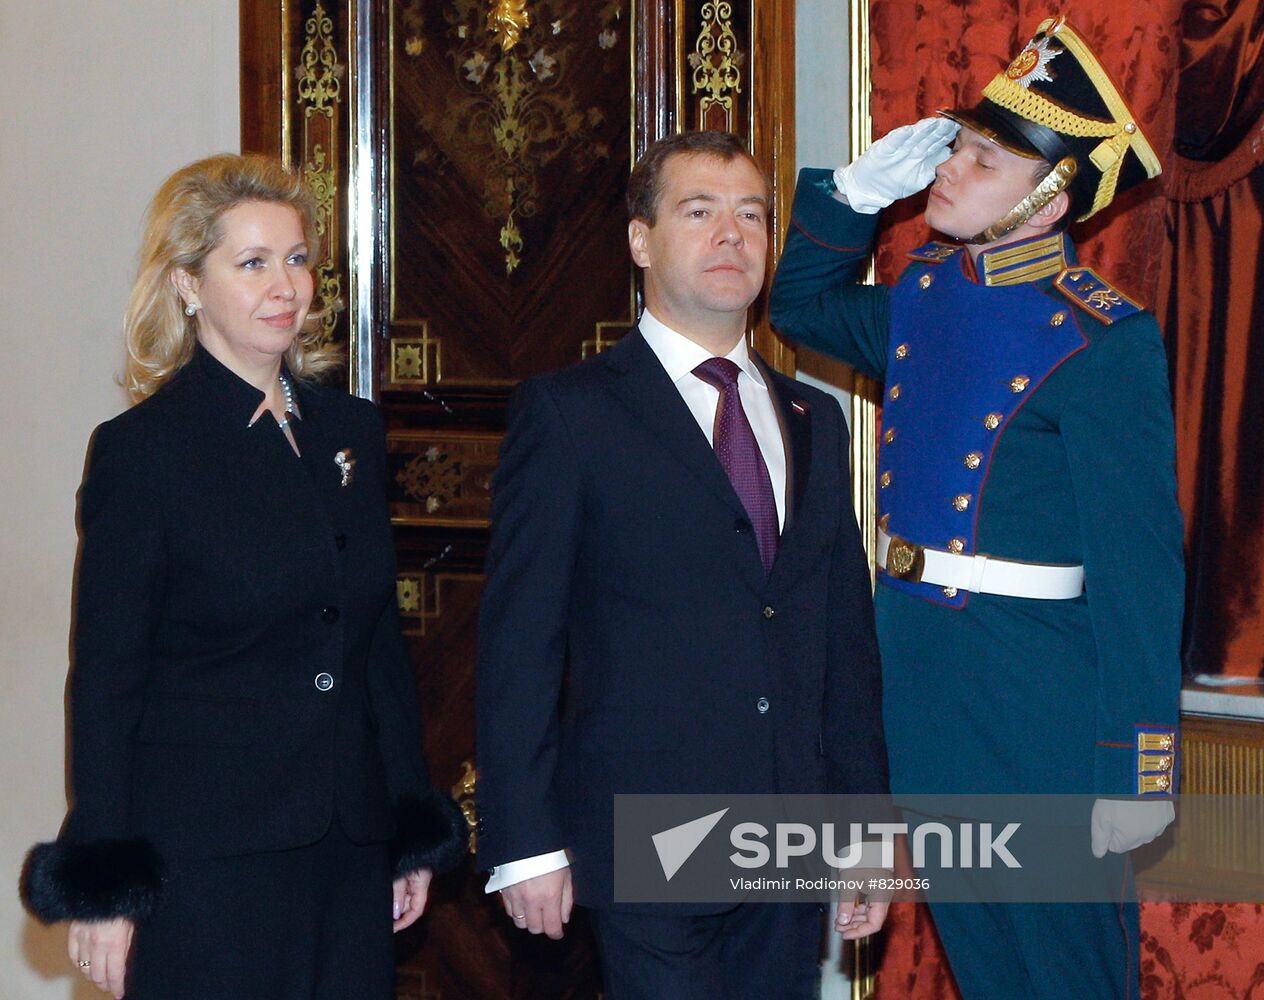 Latvian President Valdis Zatlers visits Russia